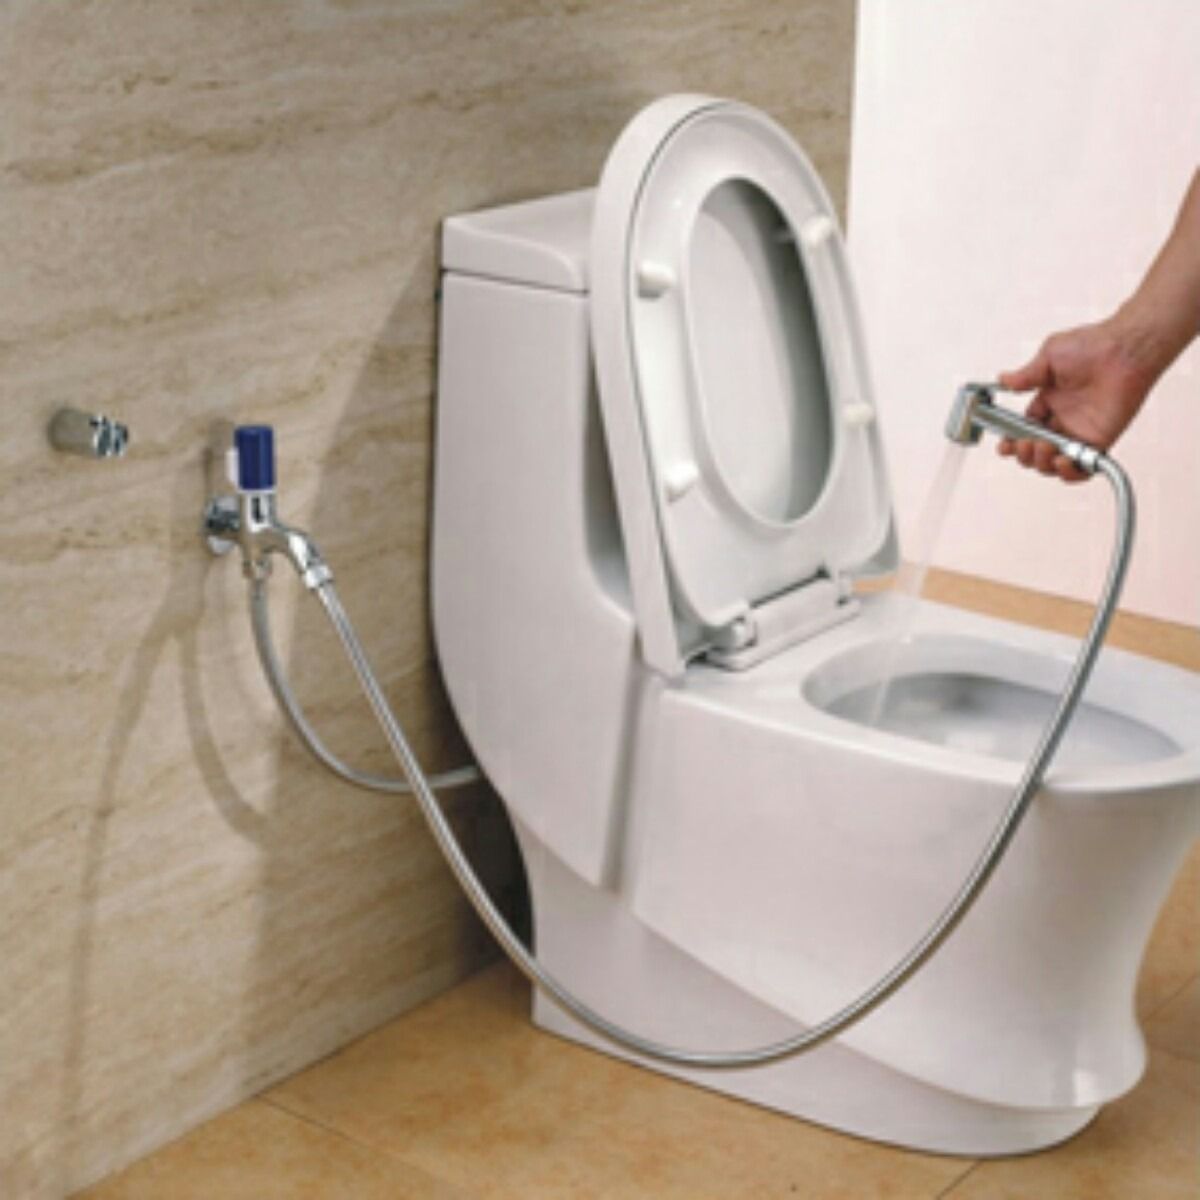 Easy4You-Bidet para WC-Bidet portatil para WC-Ducha higienica para WC-Grifo  WC-Bide portatil-Grifo para WC-Inodoro con Chorro de Agua-Ducha